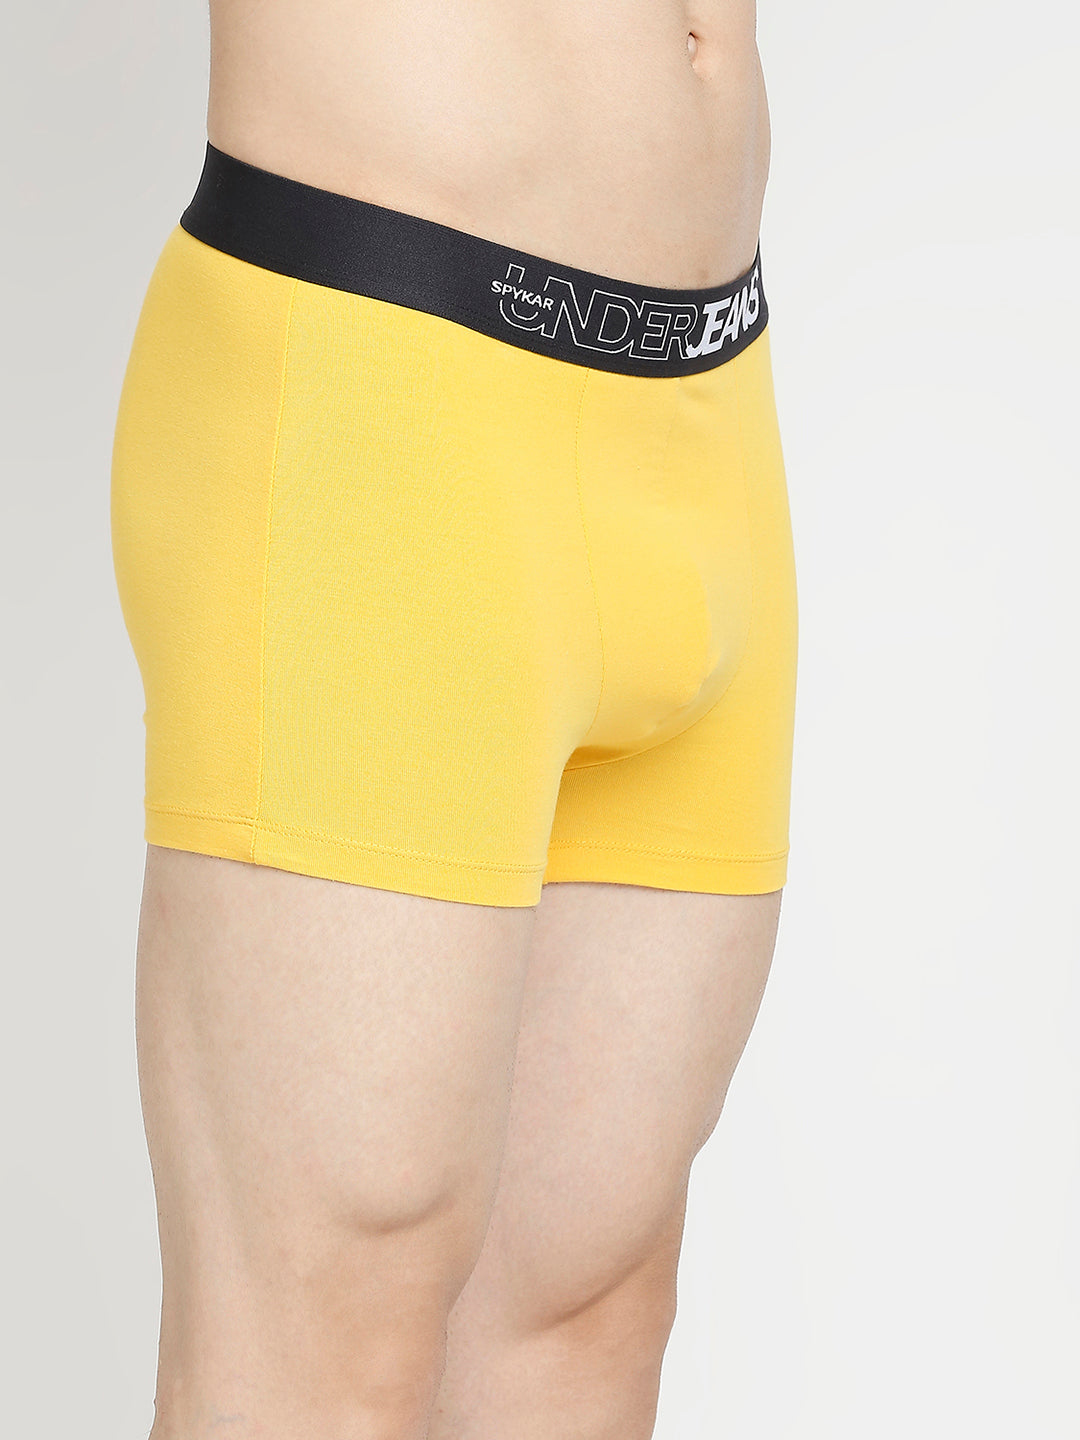 Men Premium Yellow & Dark Grey Cotton Blend Trunk - Pack Of 2- UnderJeans by Spykar